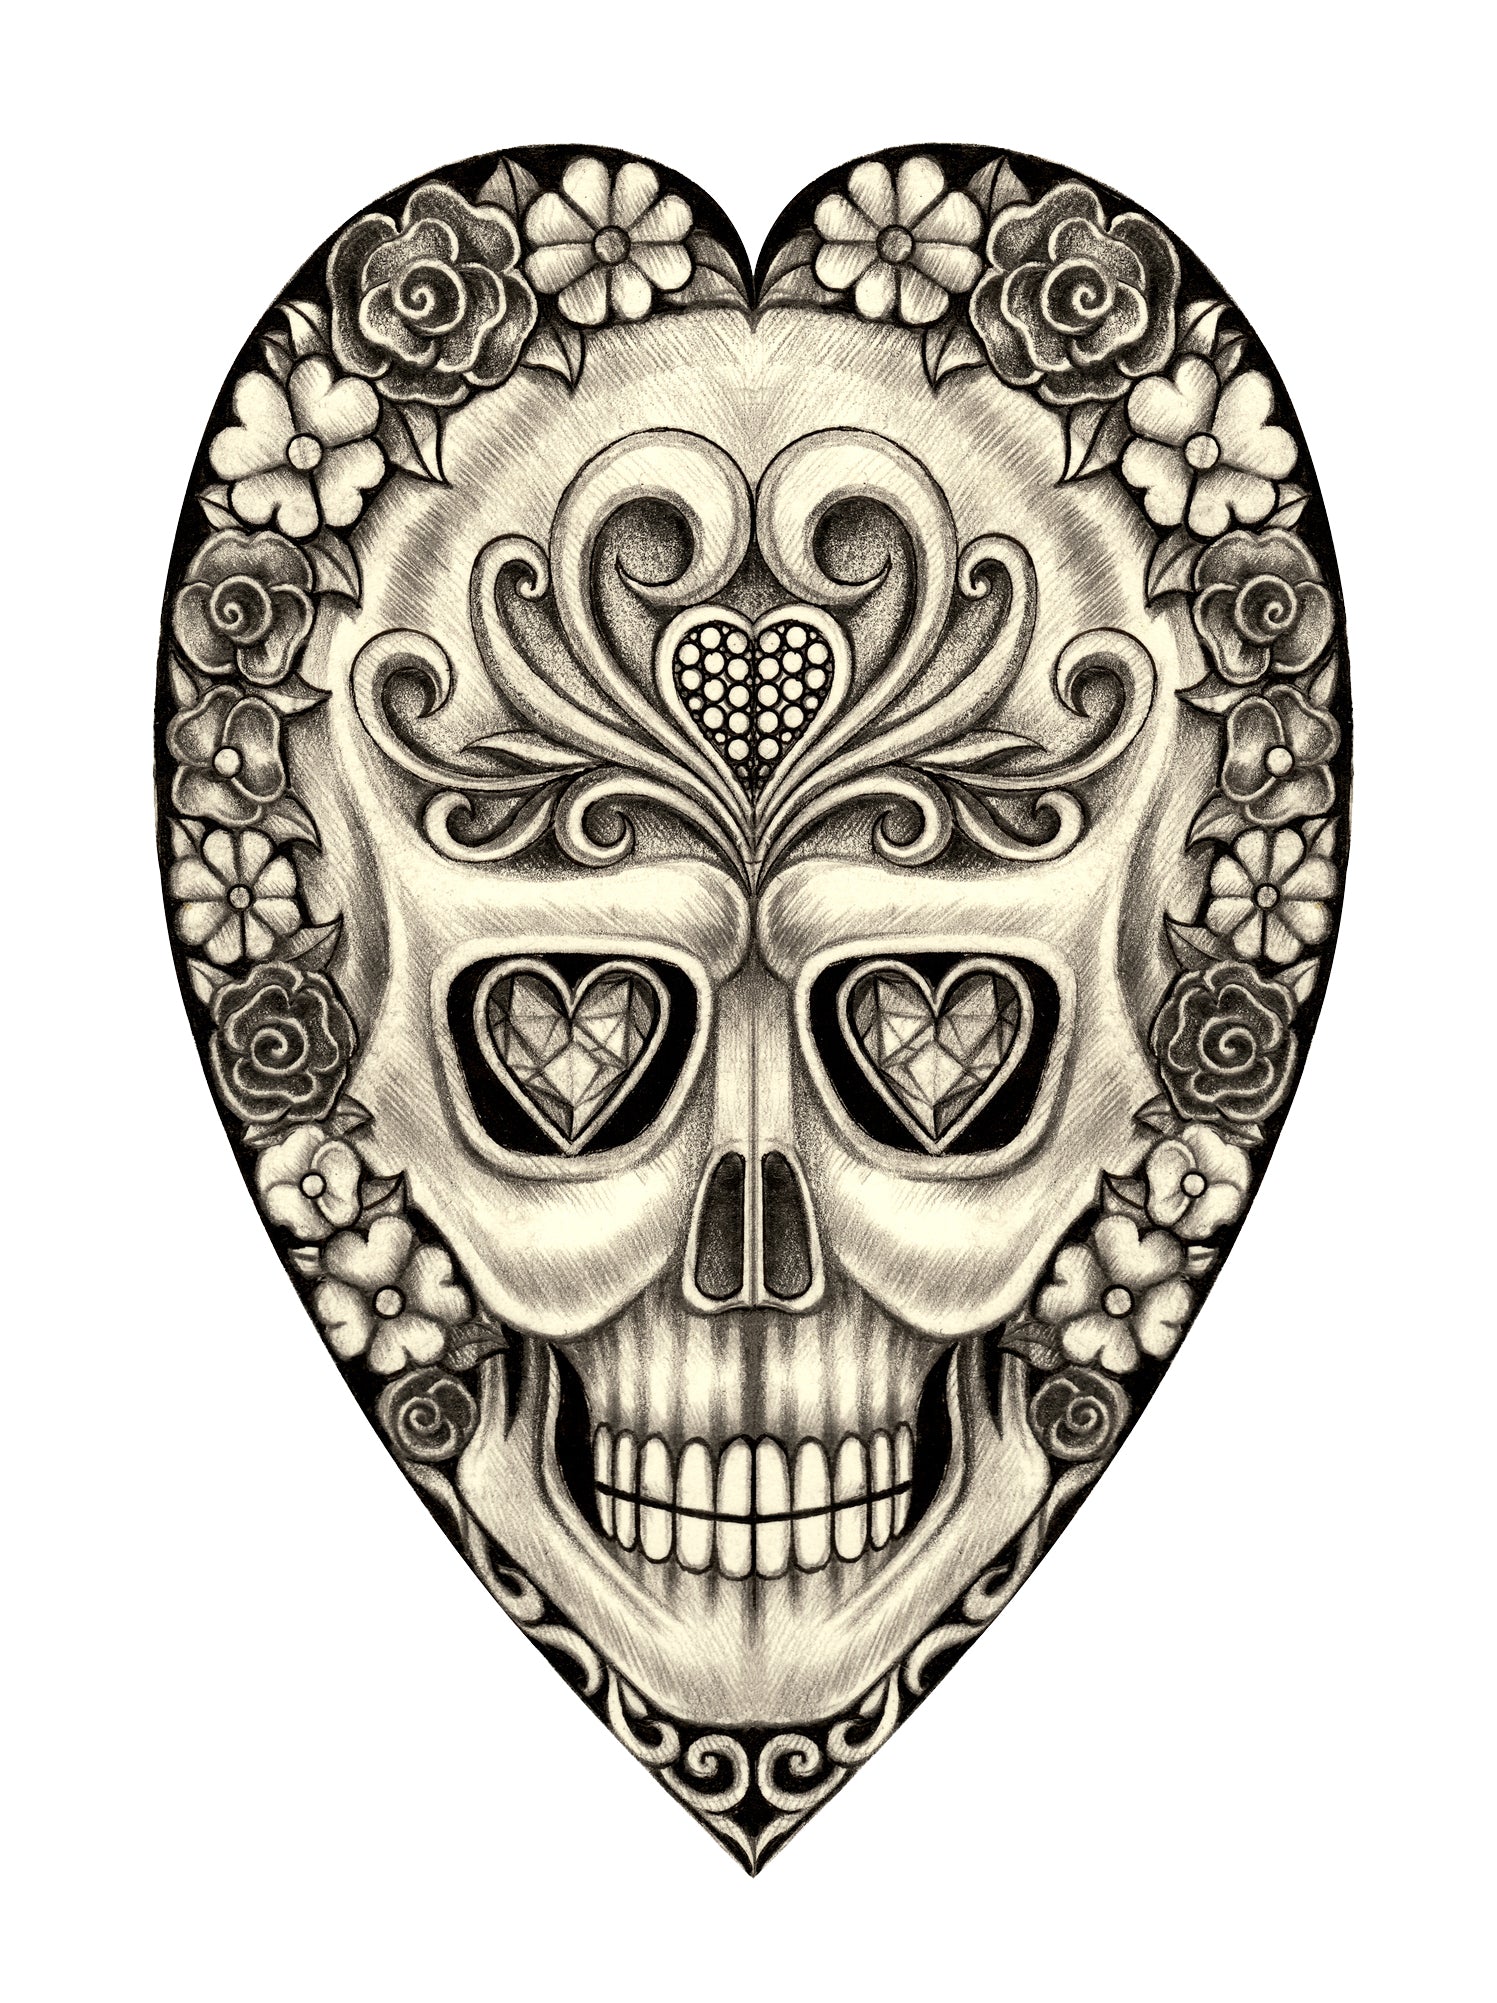 Pencil Sketch Floral Swirl Skull in Heart Vinyl Decal Sticker